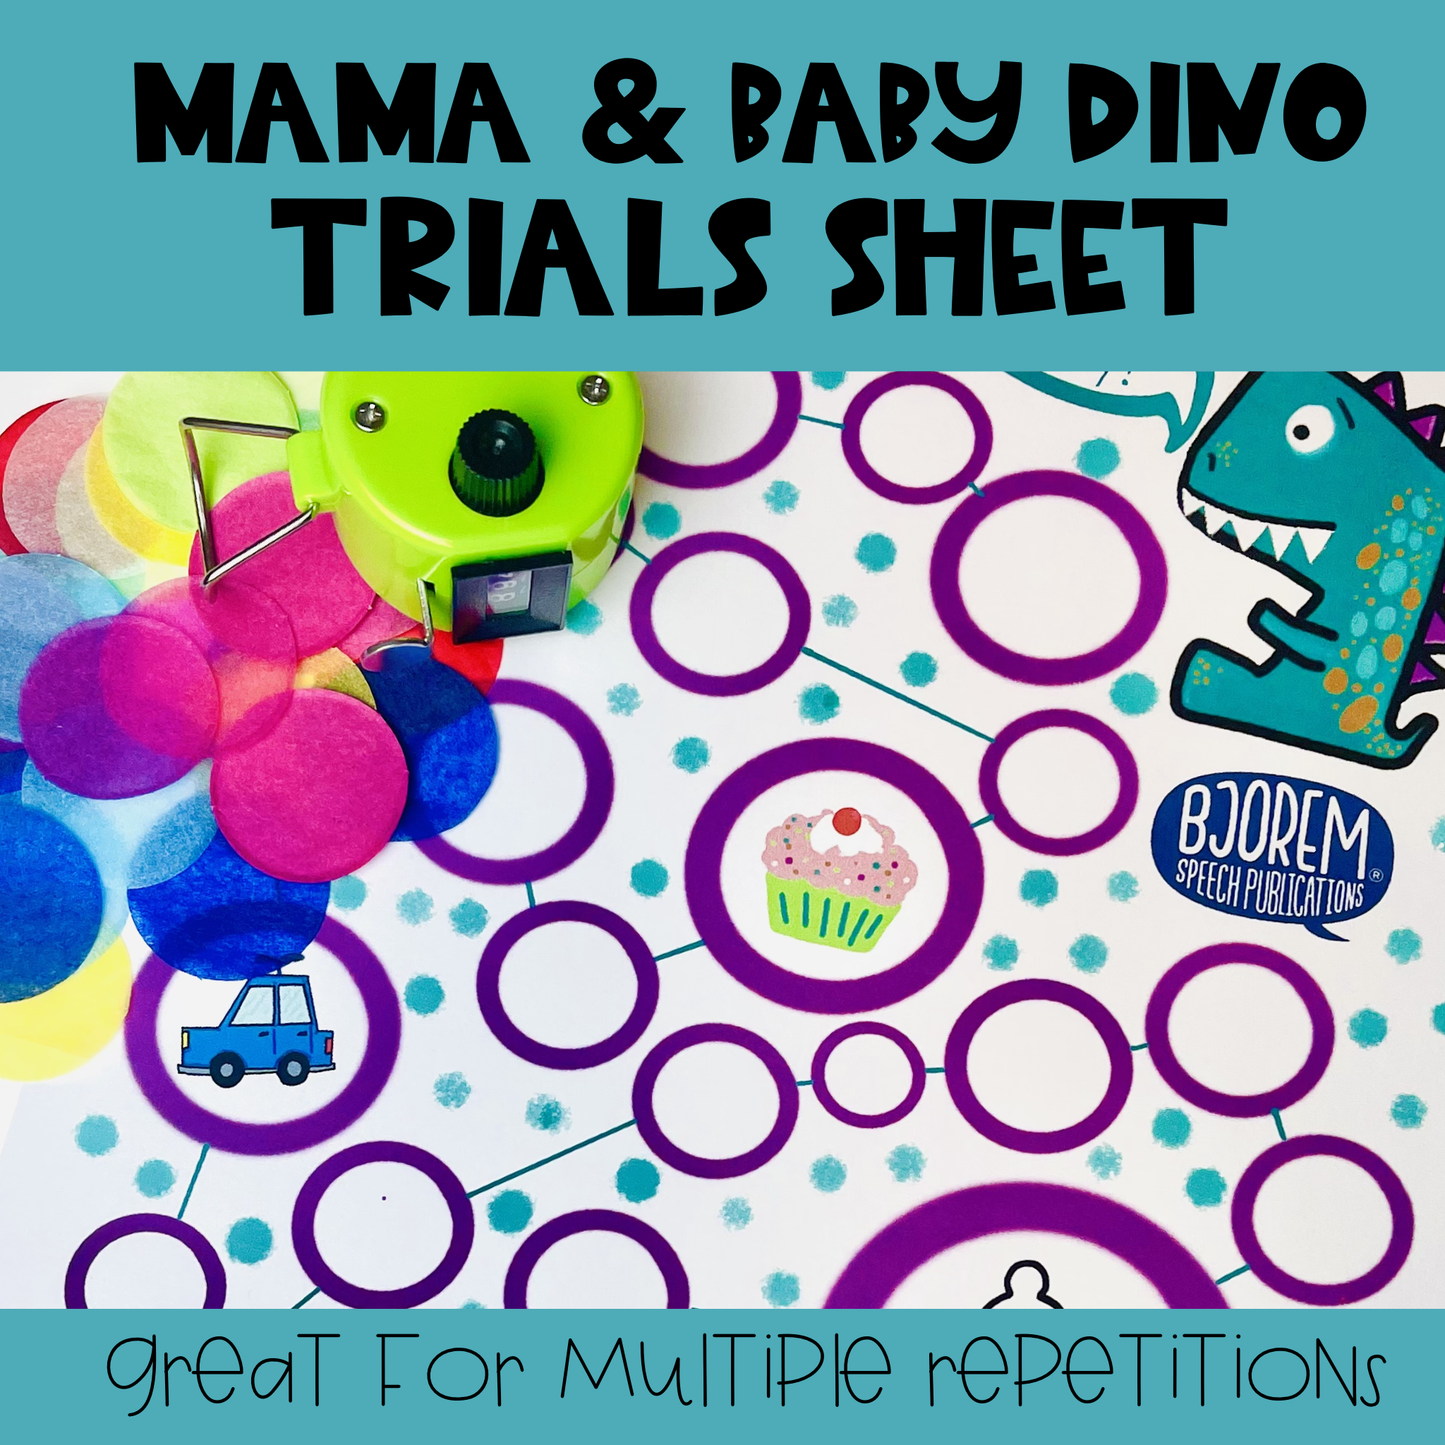 Mama & Baby Dino Trials Sheet - Download